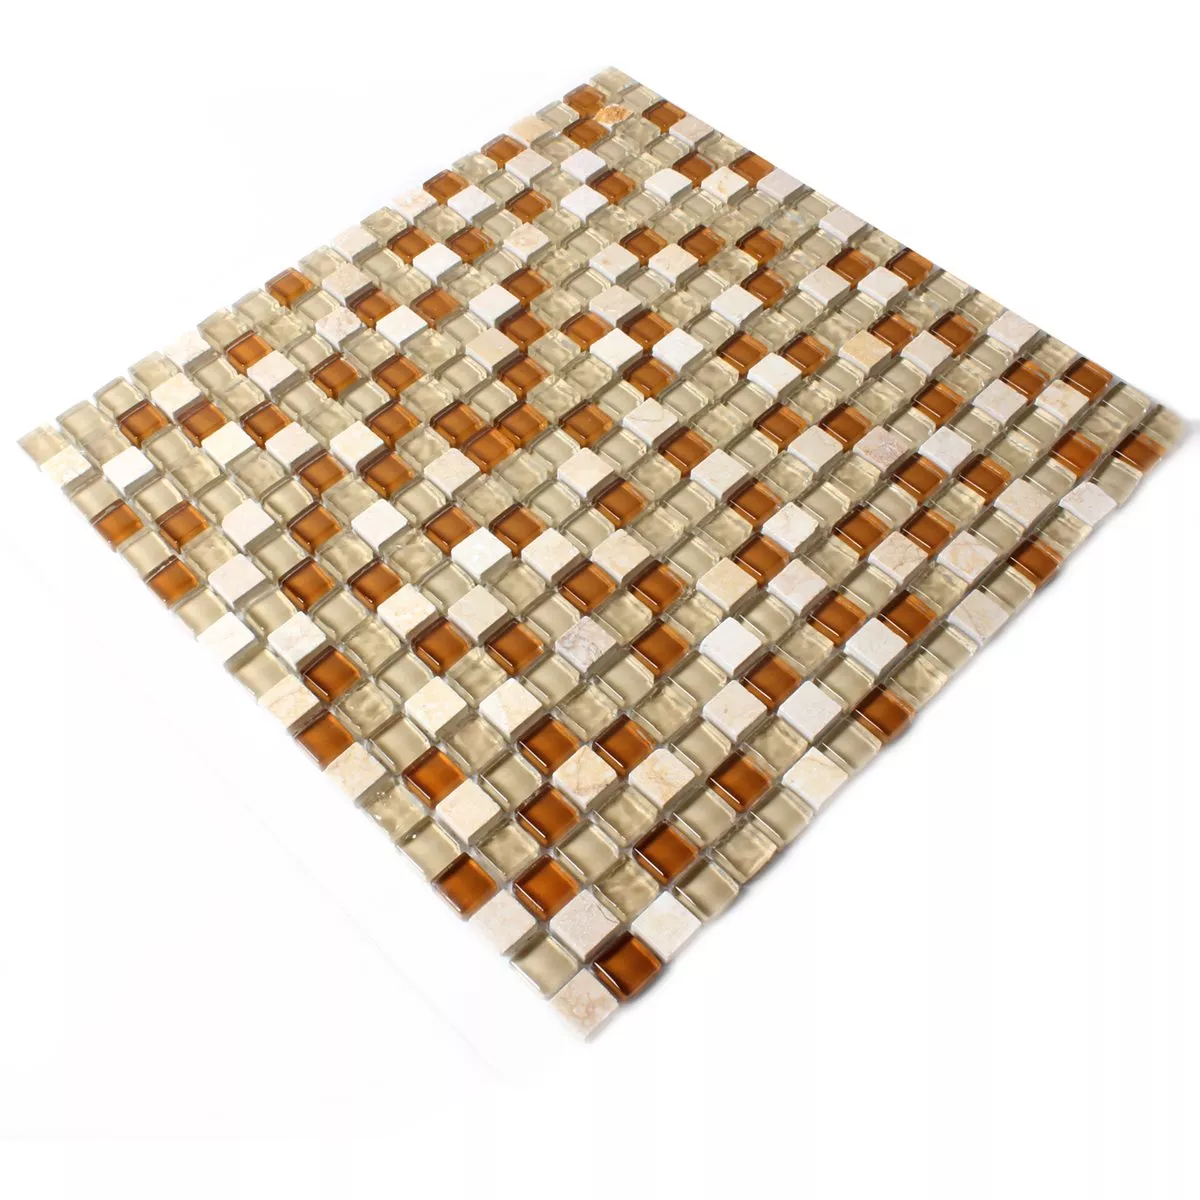 Sample Mosaic Tiles Glass Marble Brown Beige 